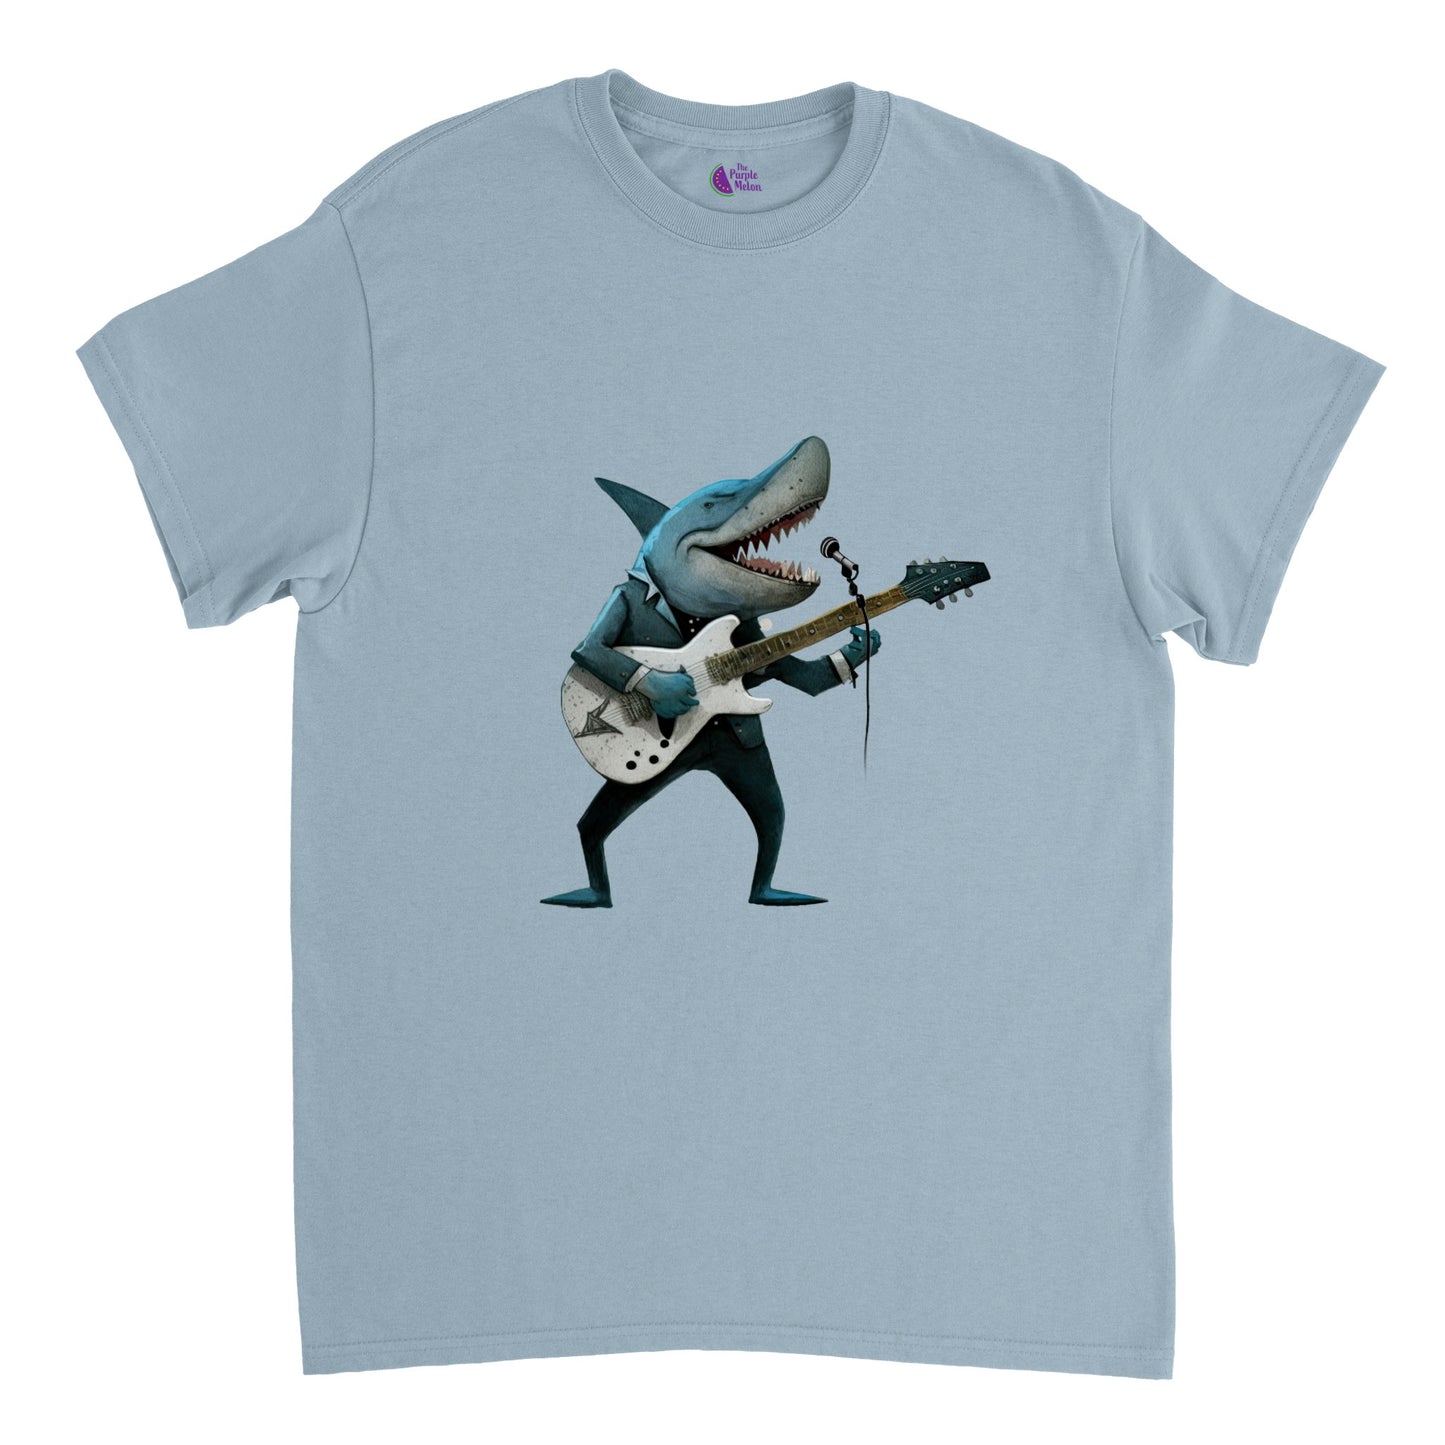 Light blue t-shirt with a shark playing guitar print